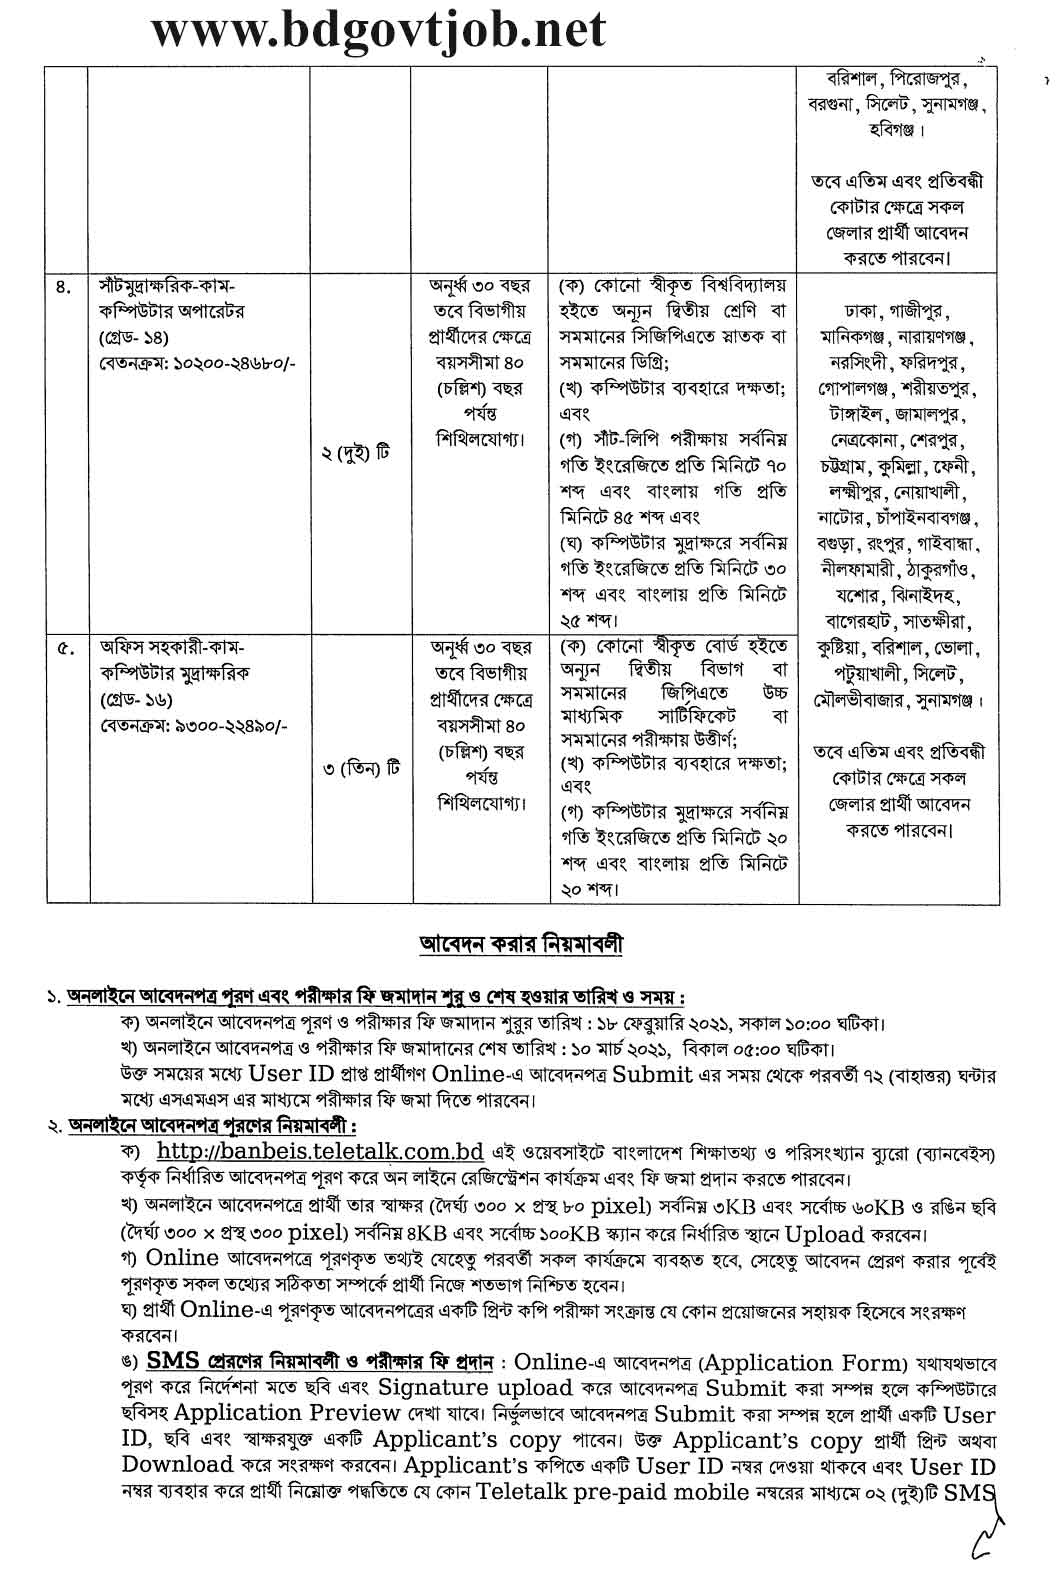 Bangladesh Bureau of the Educational Information and Statistics Job Circular 2021